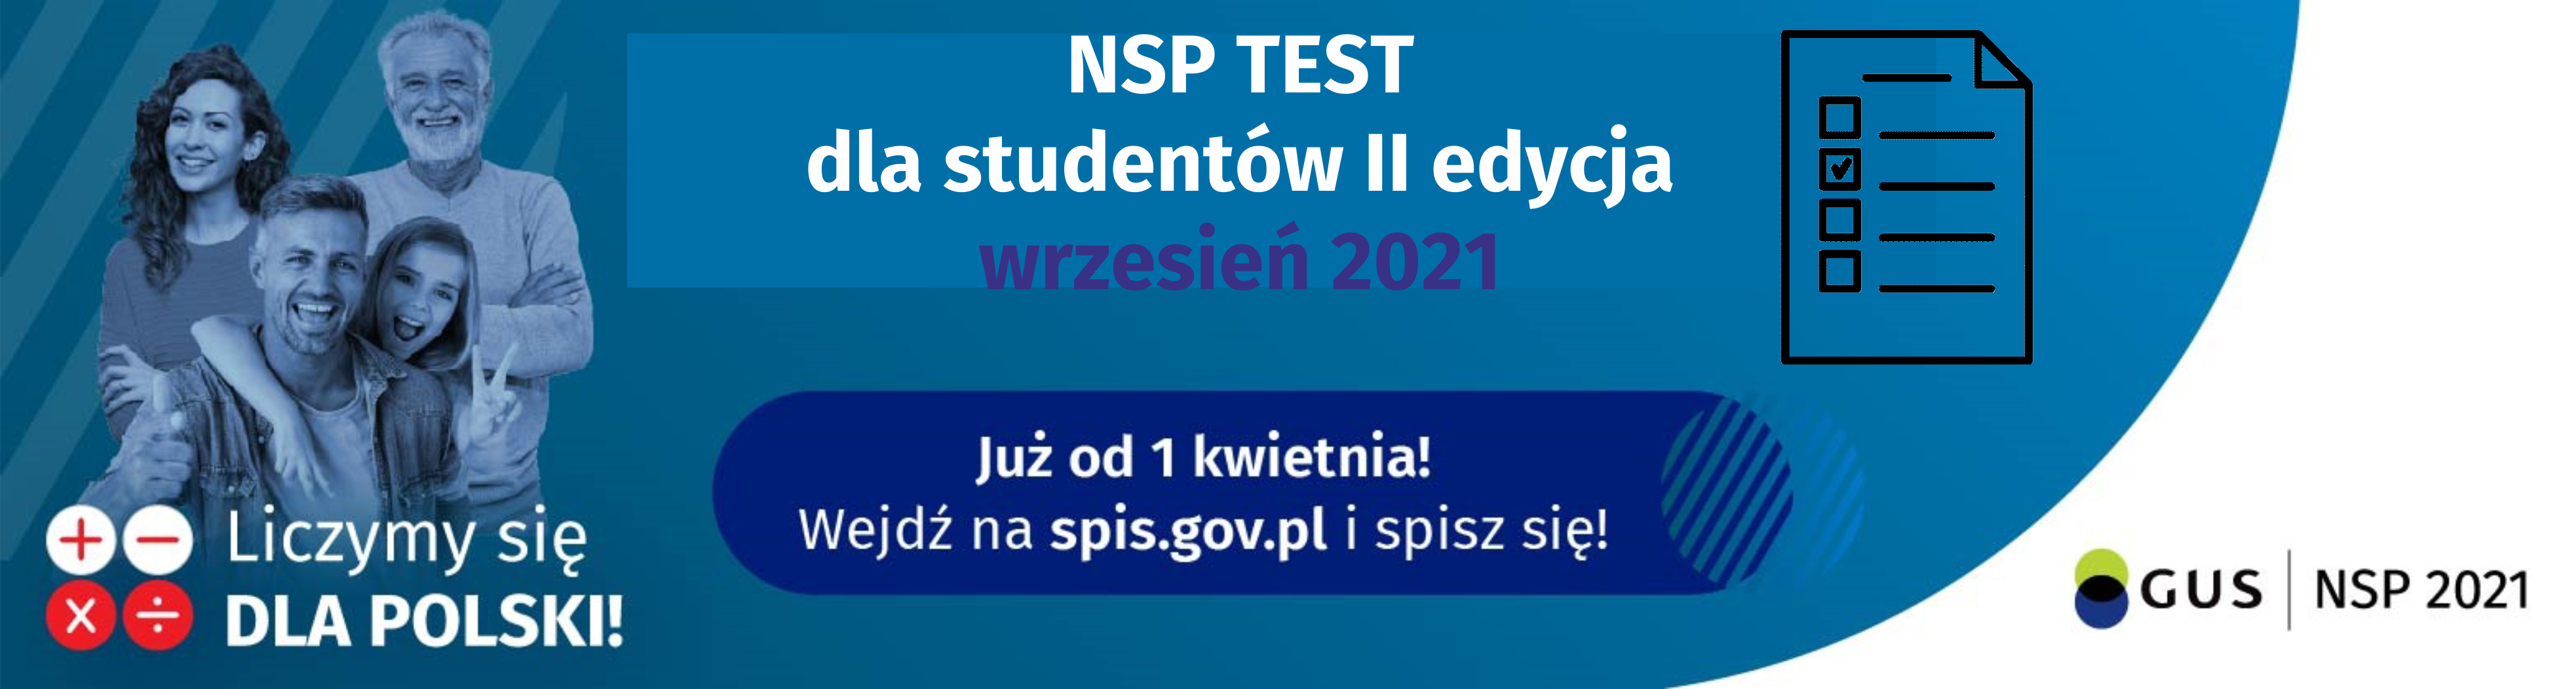 Konkurs NSP Test Student 